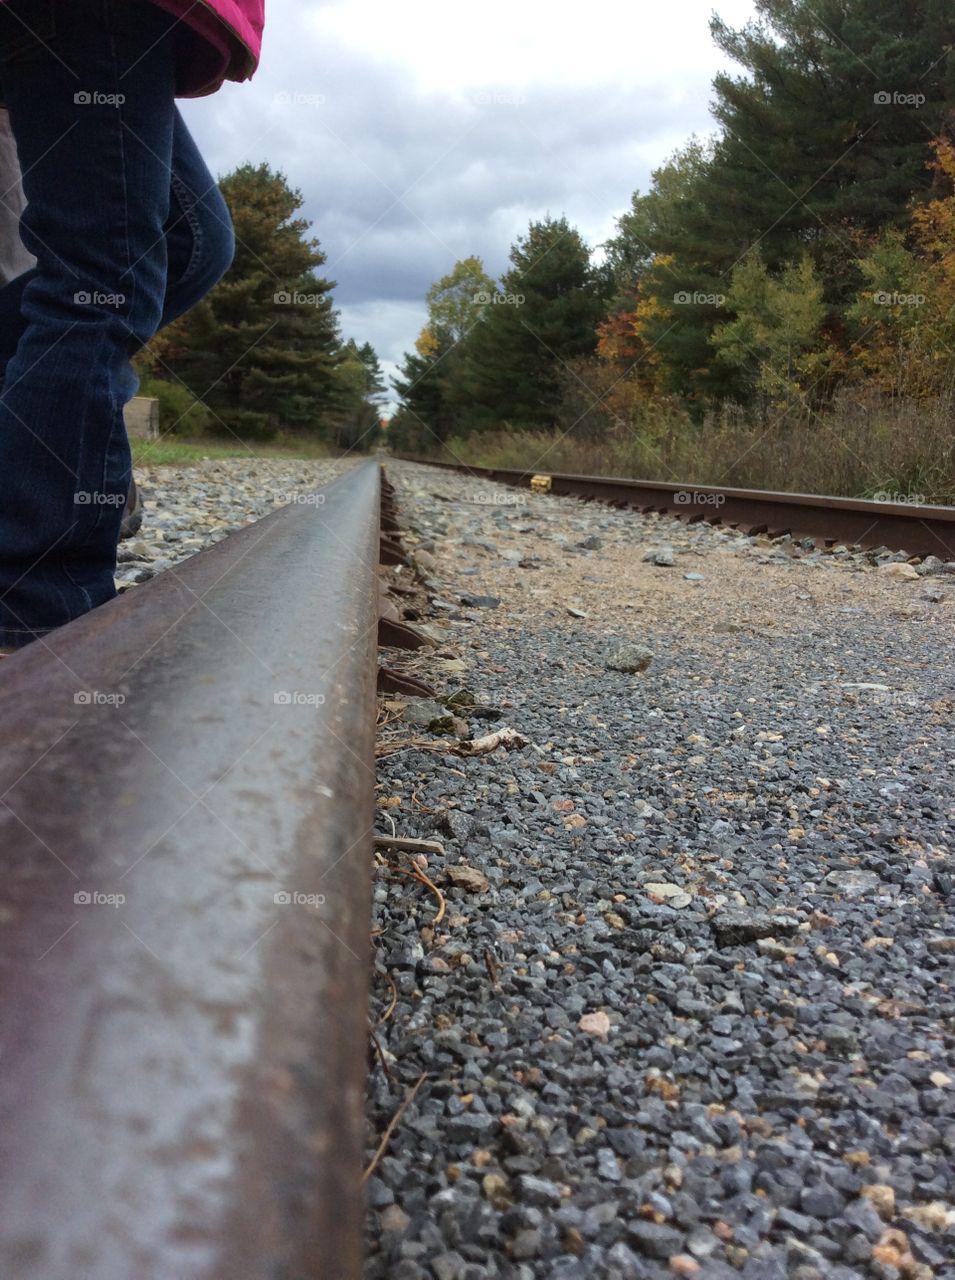 Walking by train tracks 